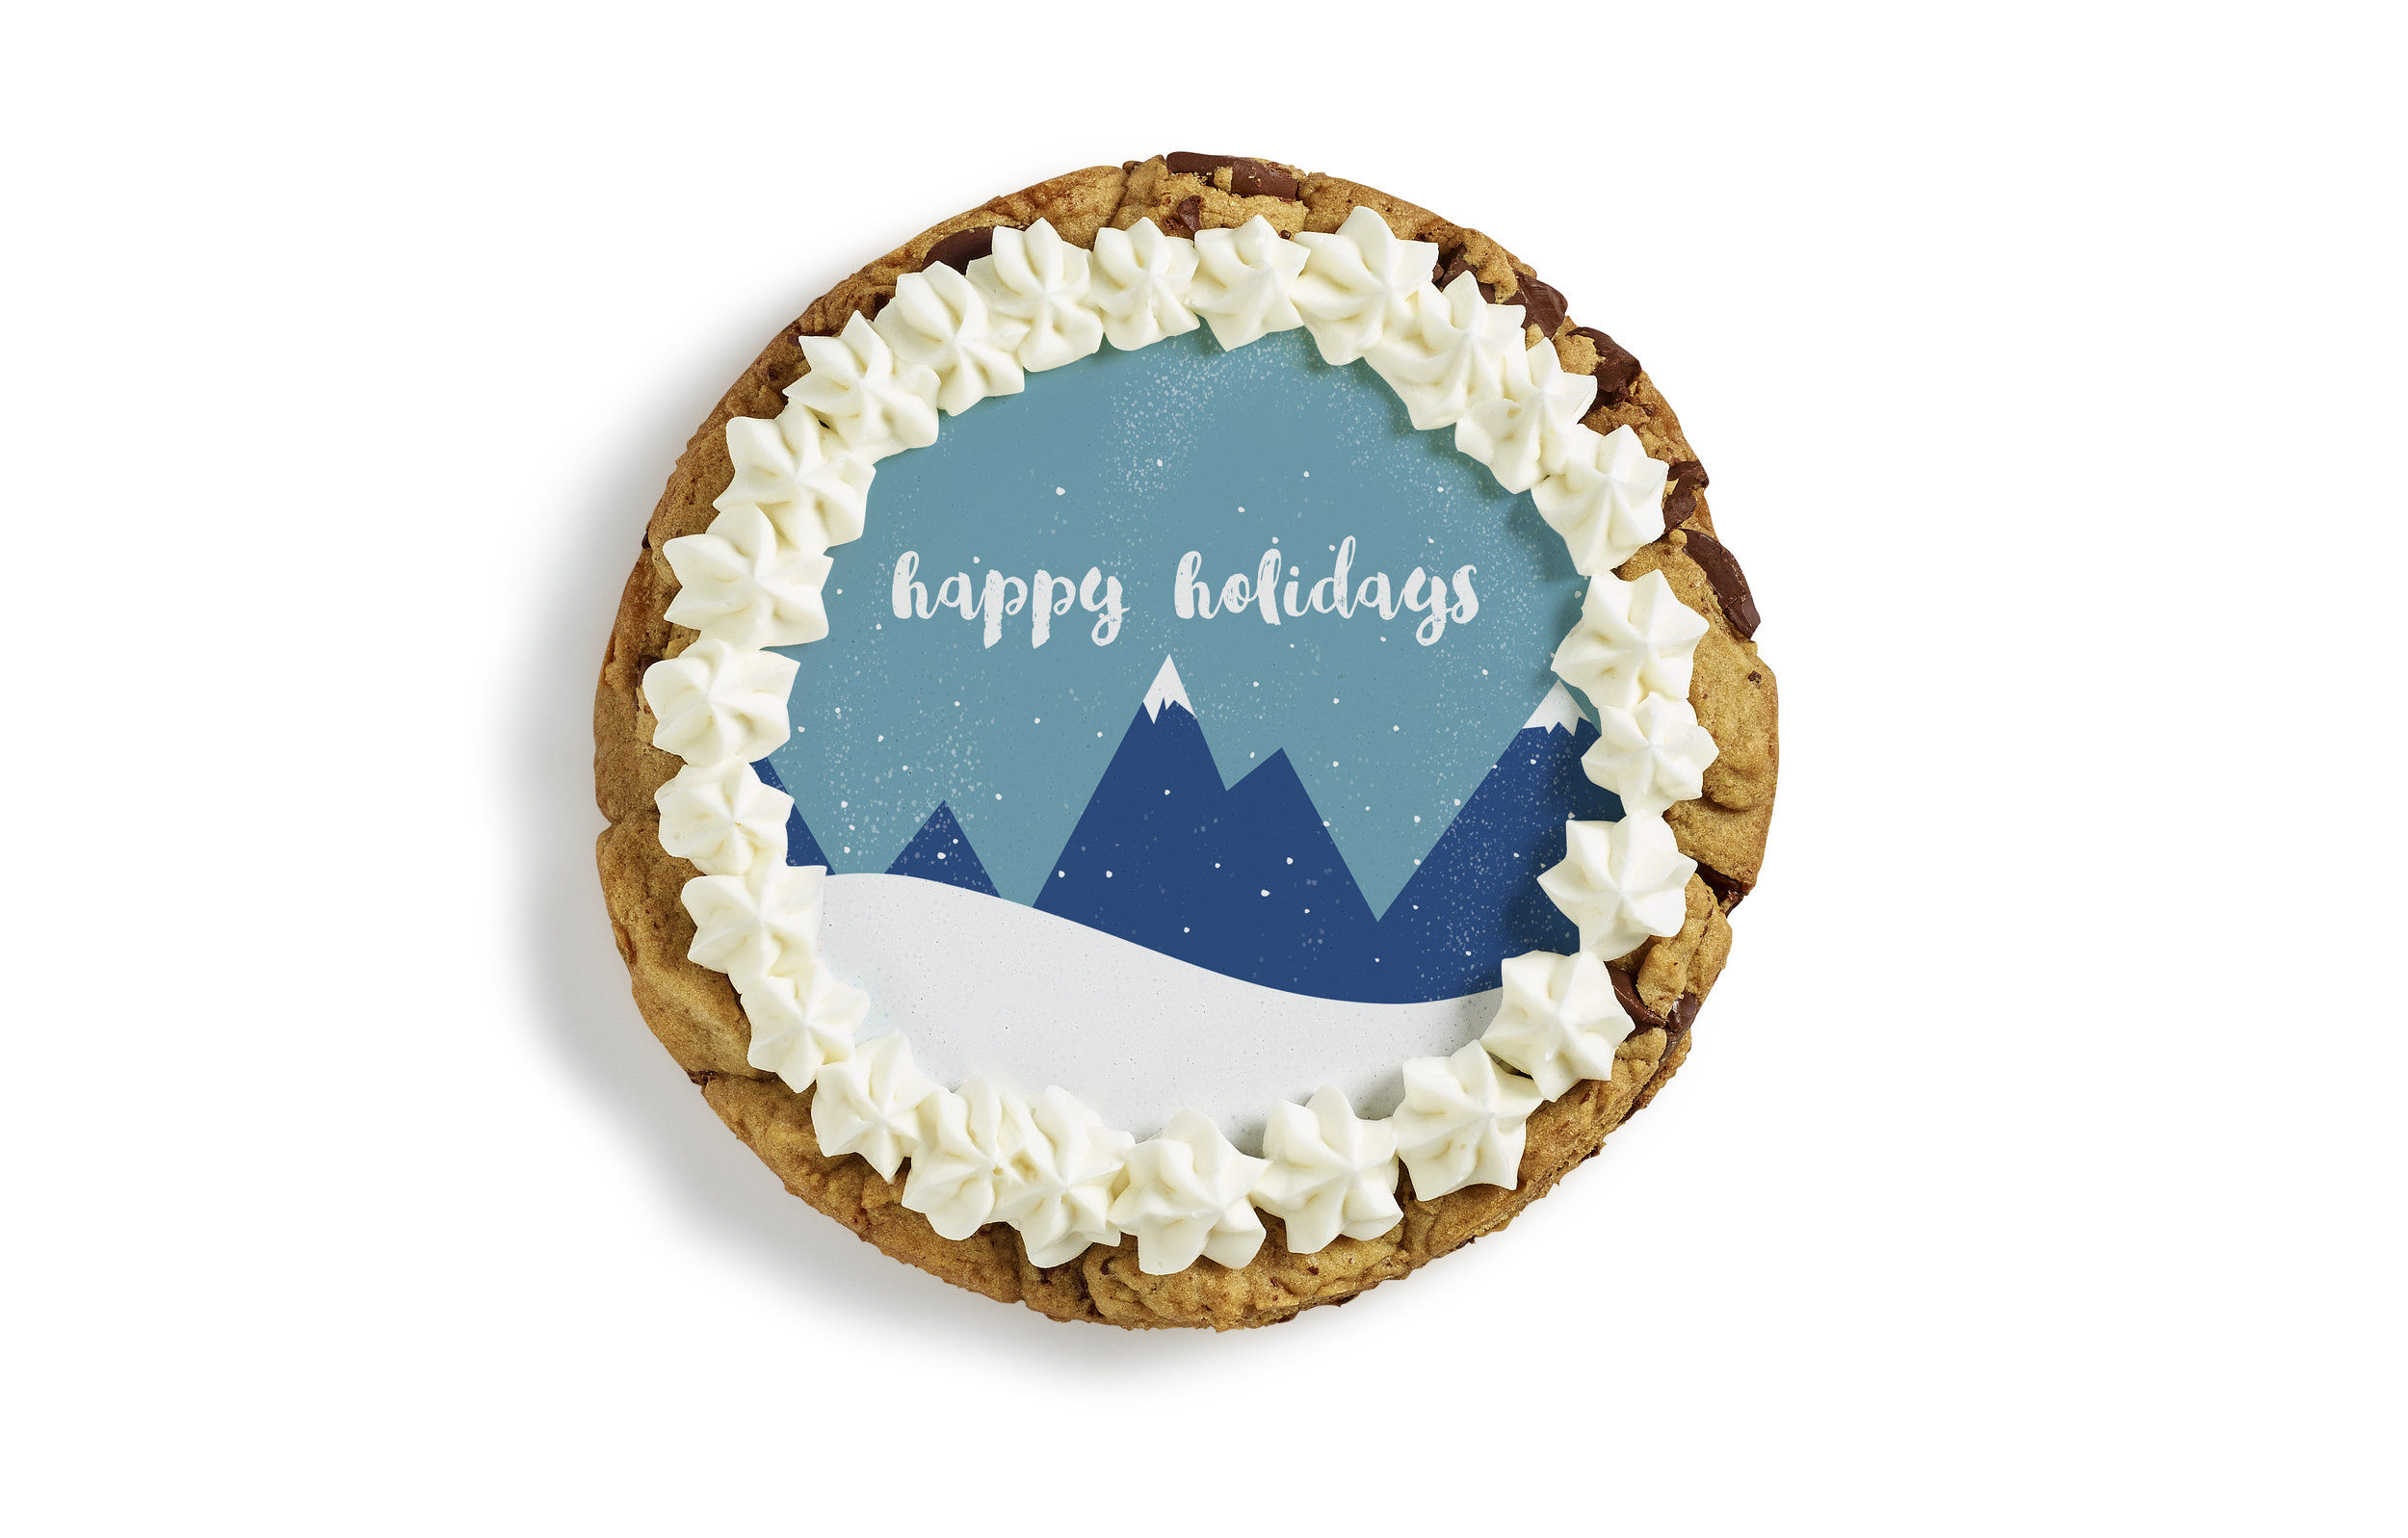 Mini_Cookie_Cake_holiday_1.jpg